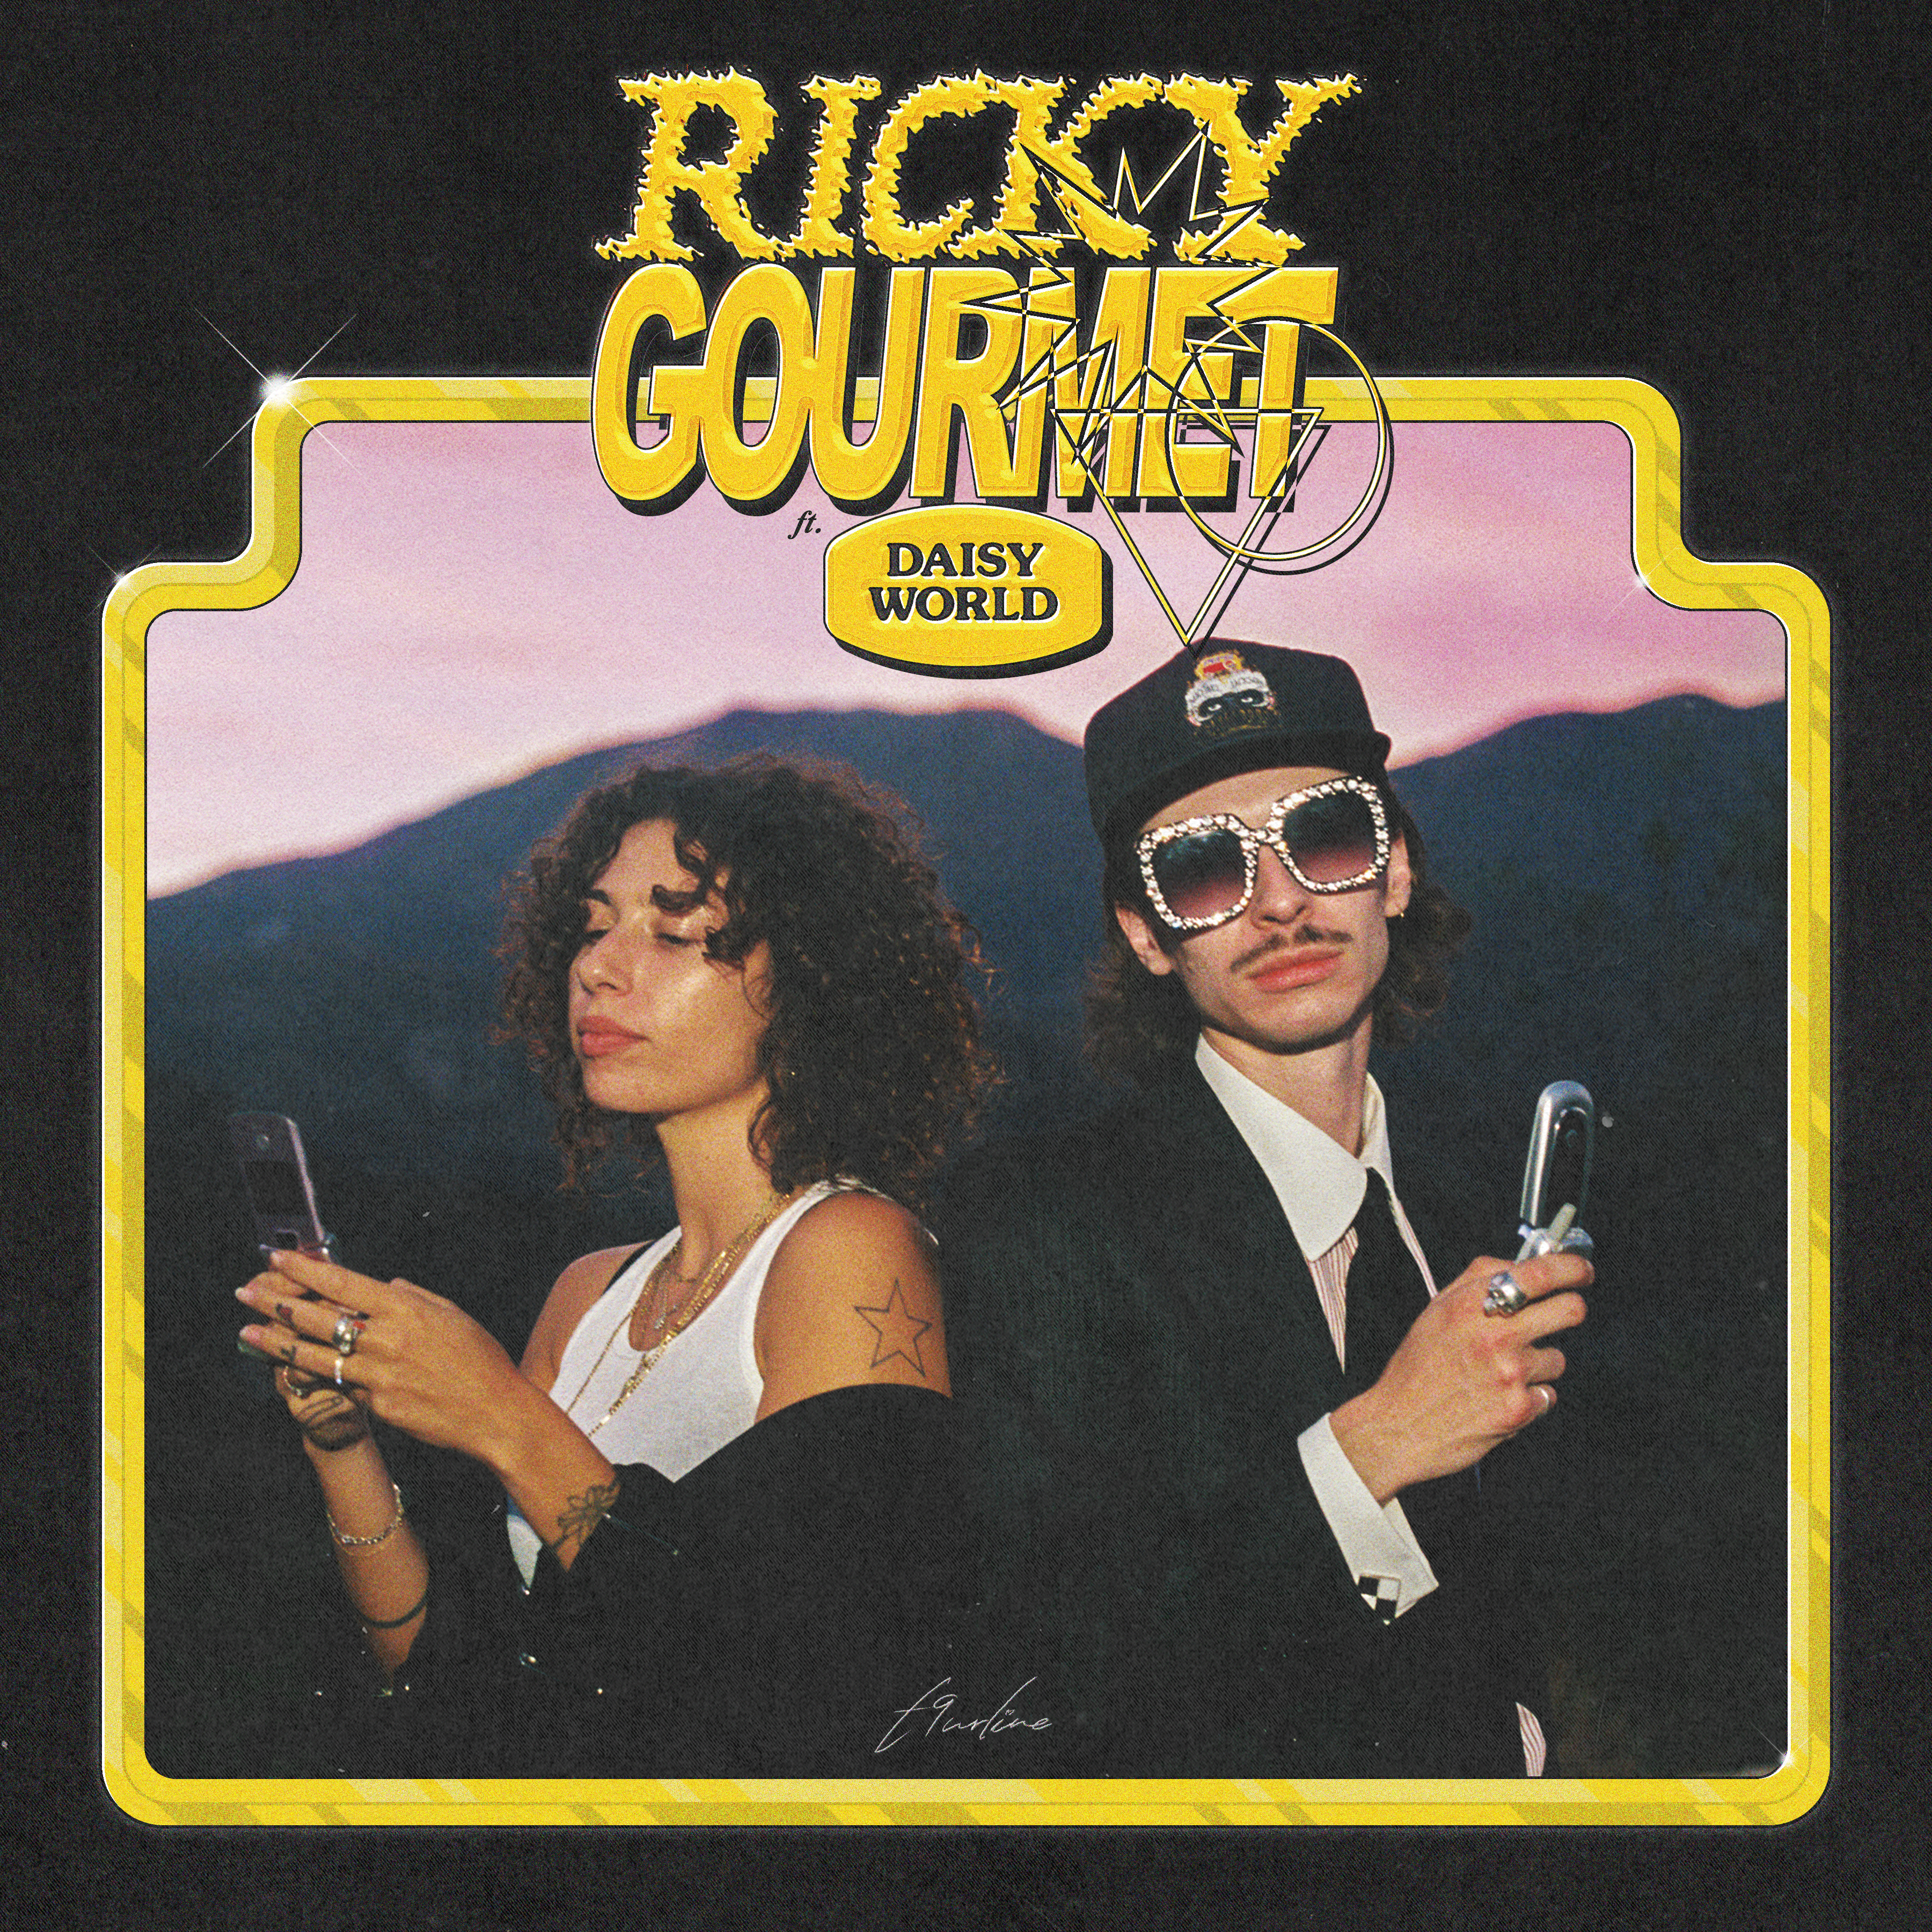 Ricky Gourmet ft. DAISY WORLD “t9urline”